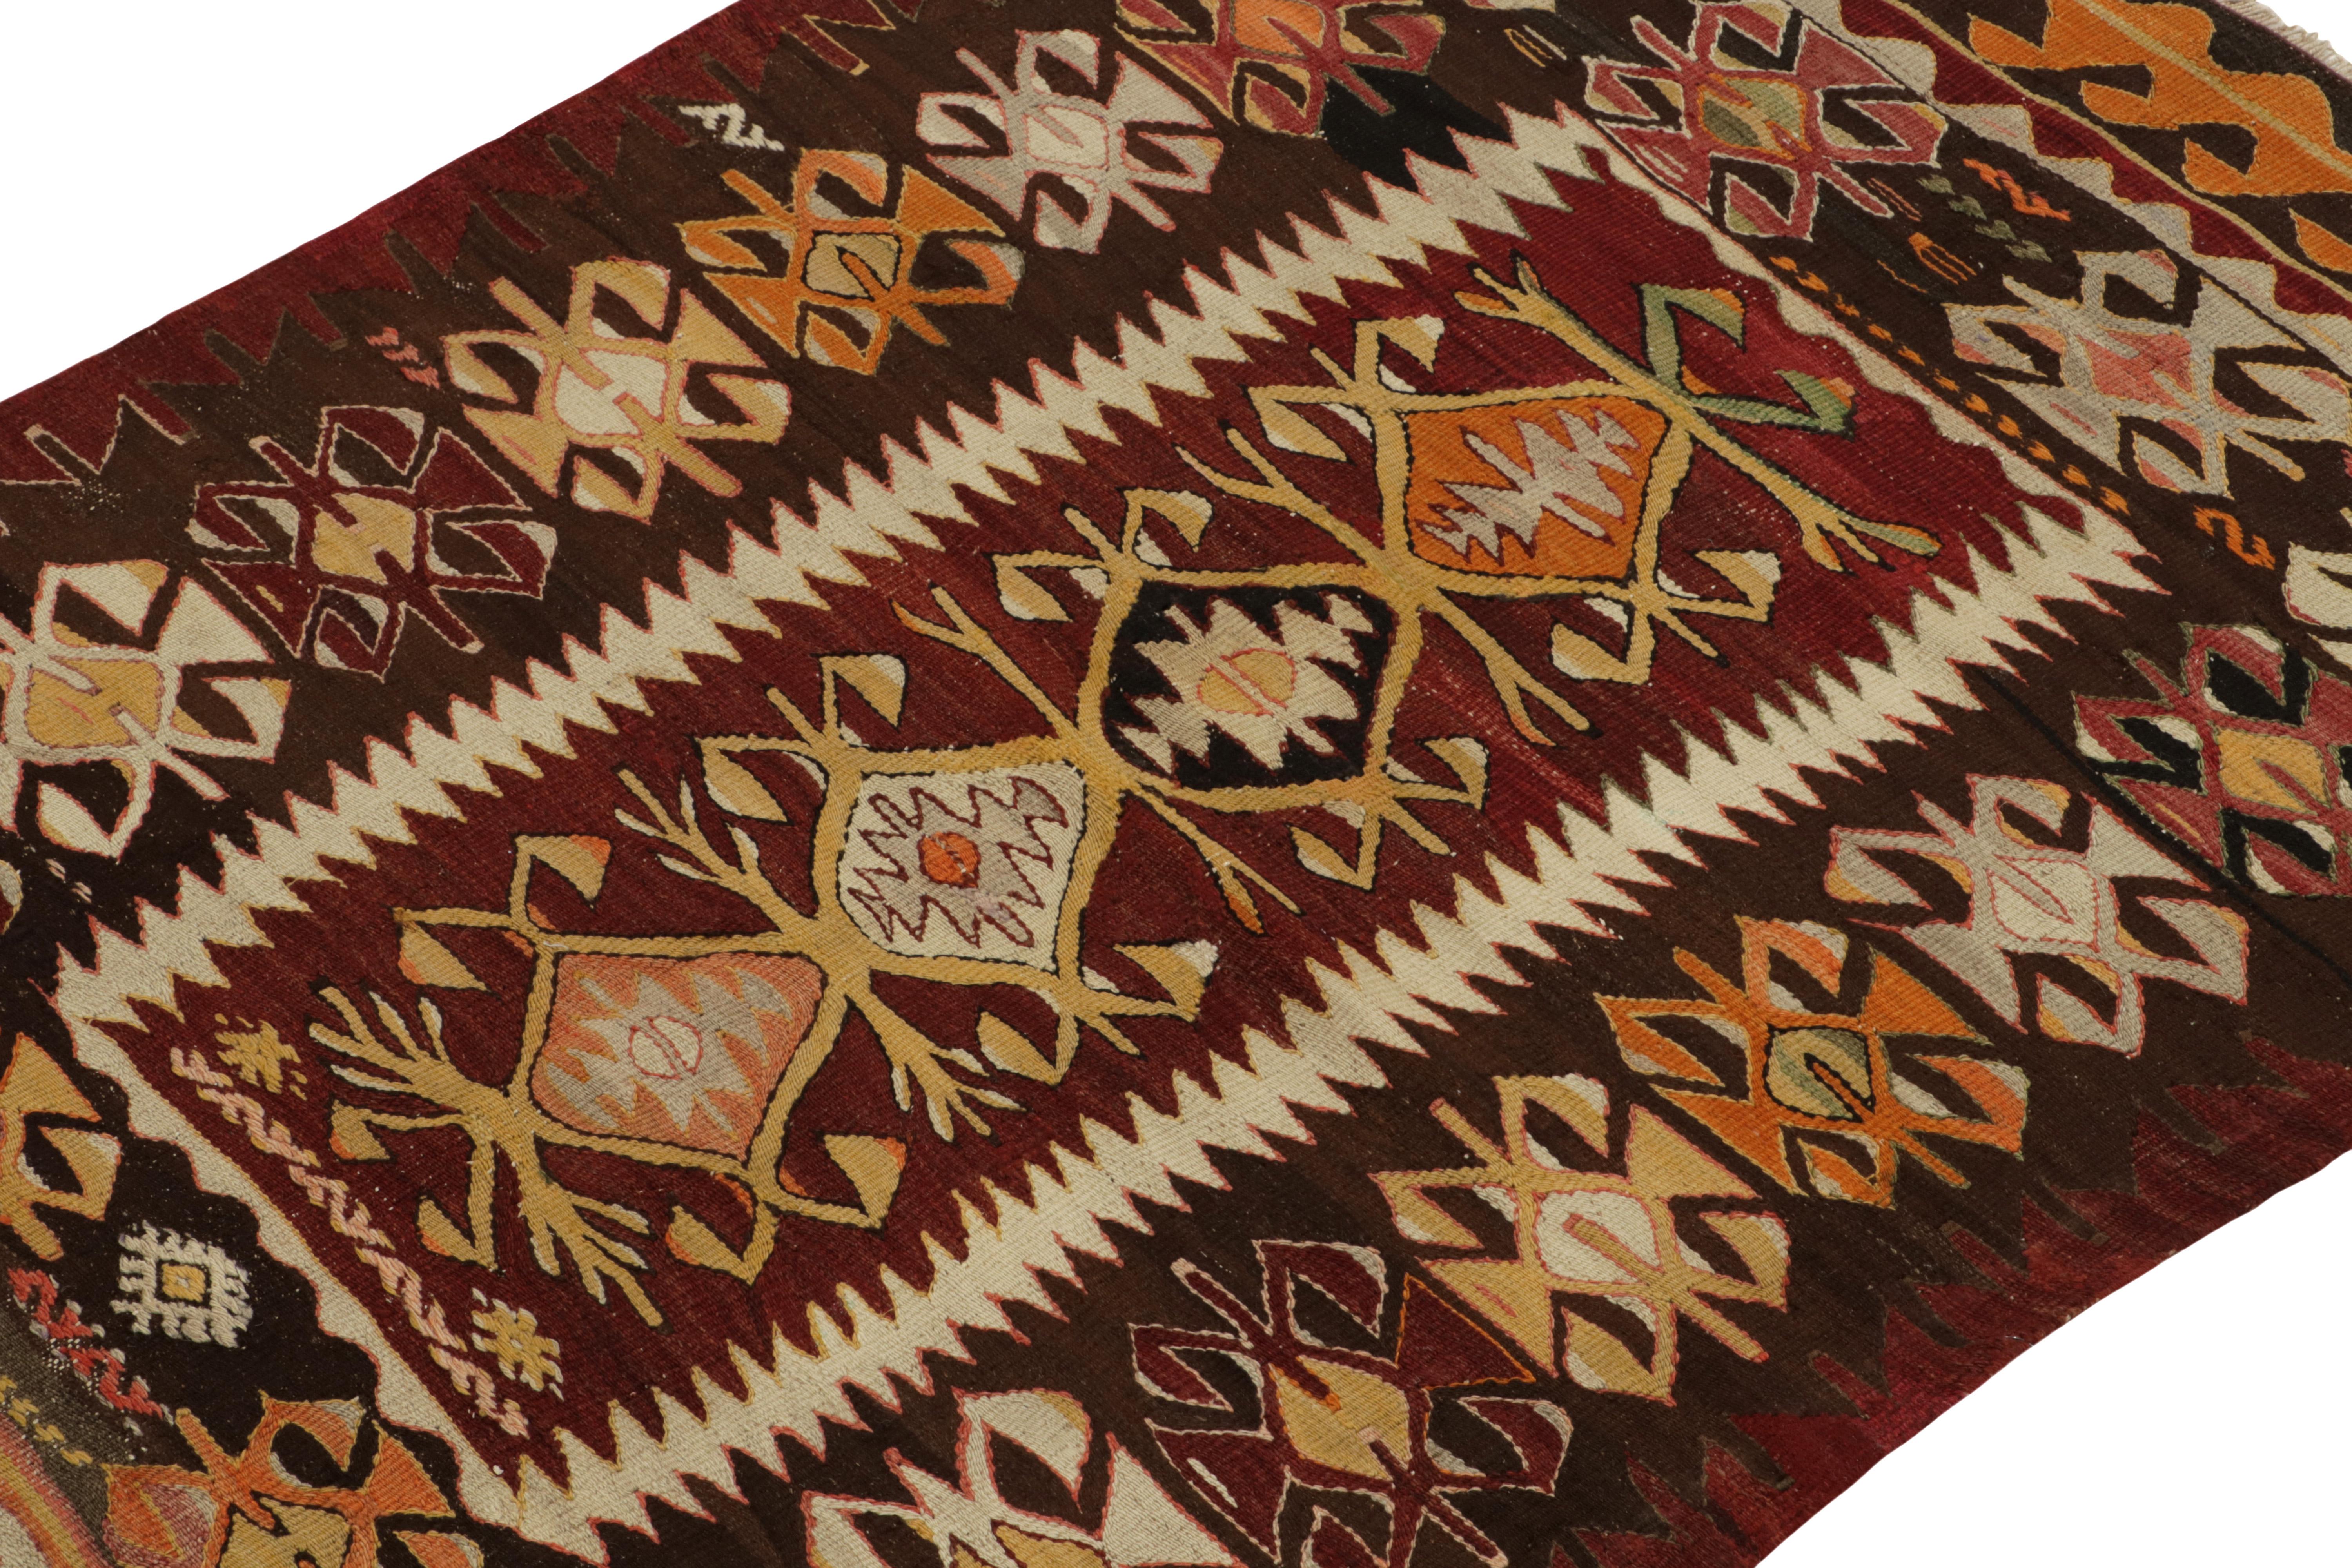 Turkish 1940s Vintage Konya Kilim in Red and Beige-brownTribal pattern by Rug & Kilim For Sale